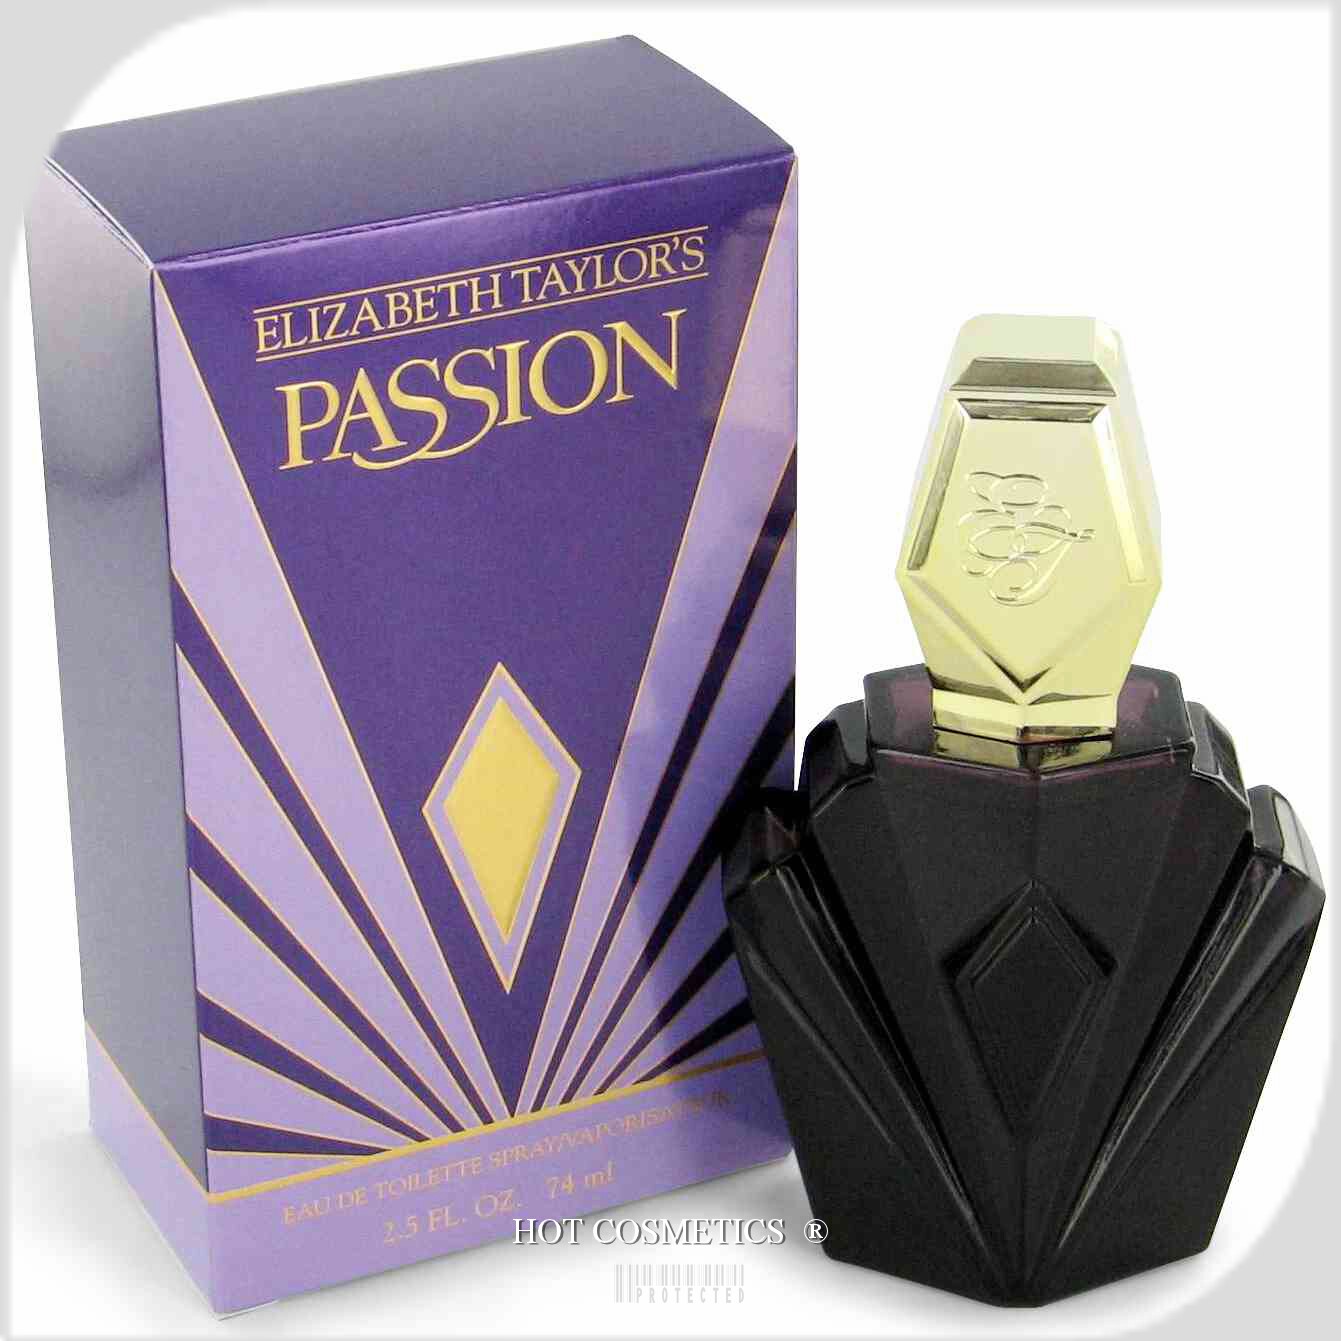 perfume in dark purple bottle